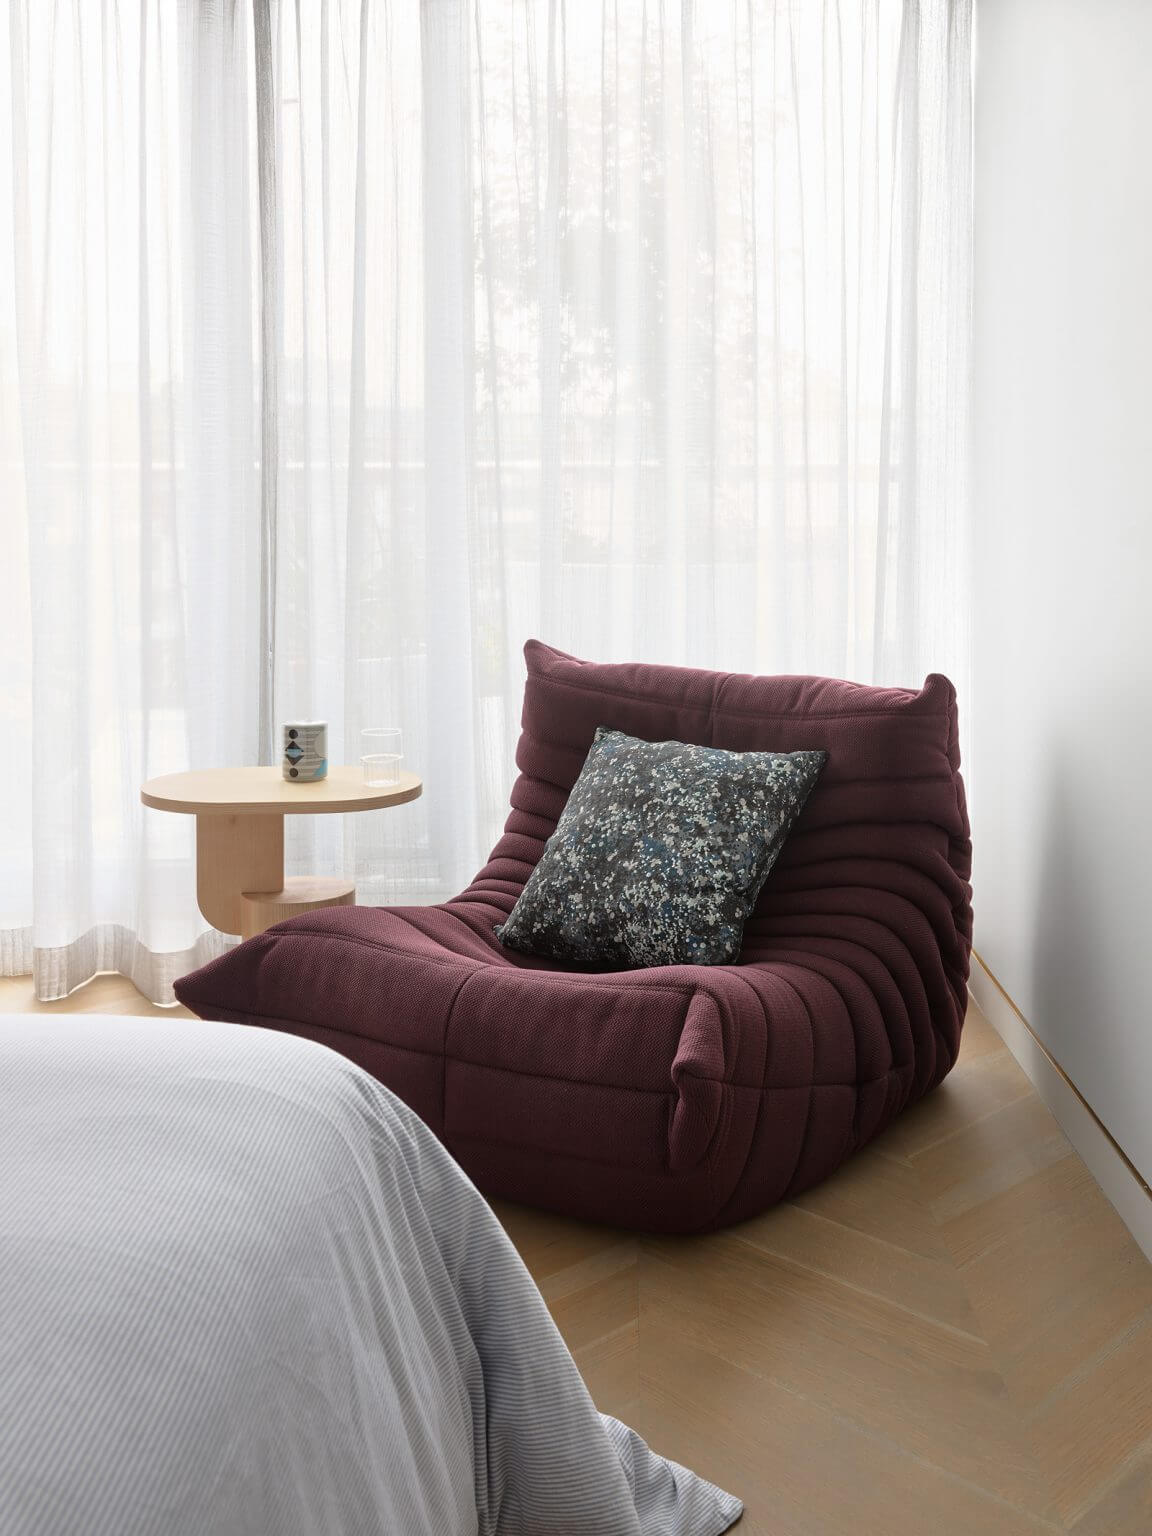 modern bedroom wth soft colors